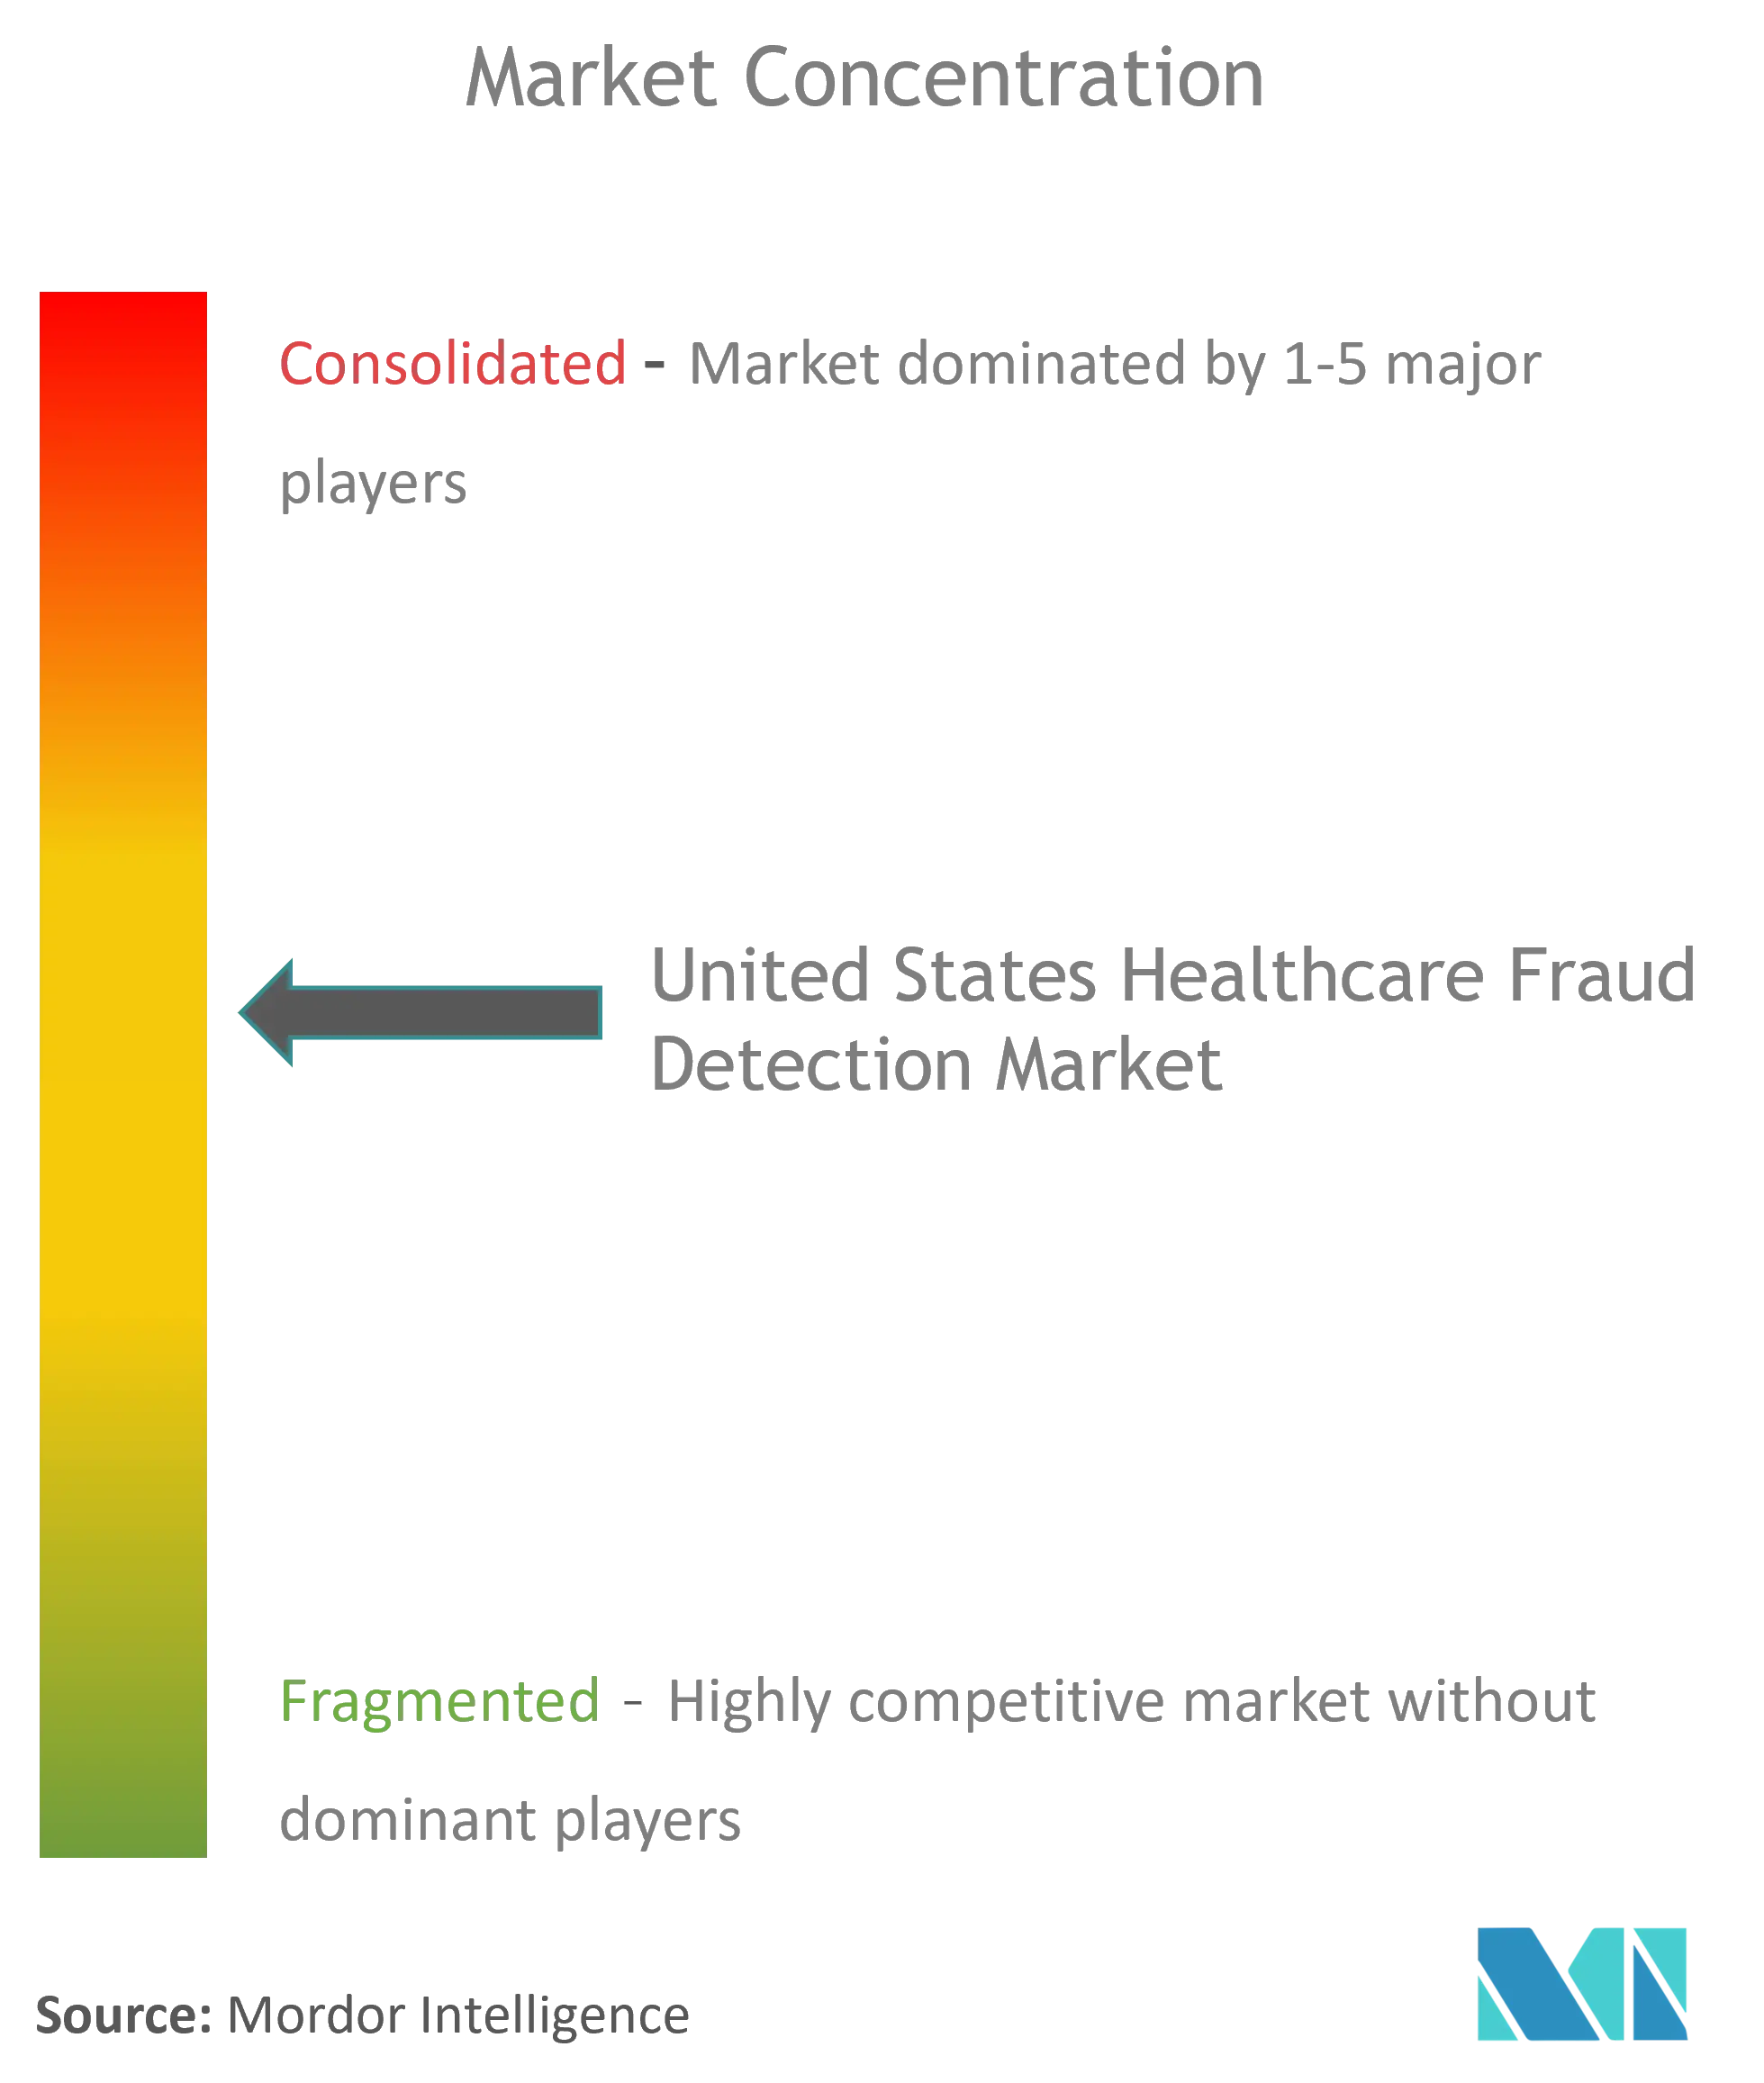 US Healthcare Fraud Detection Market Concentration